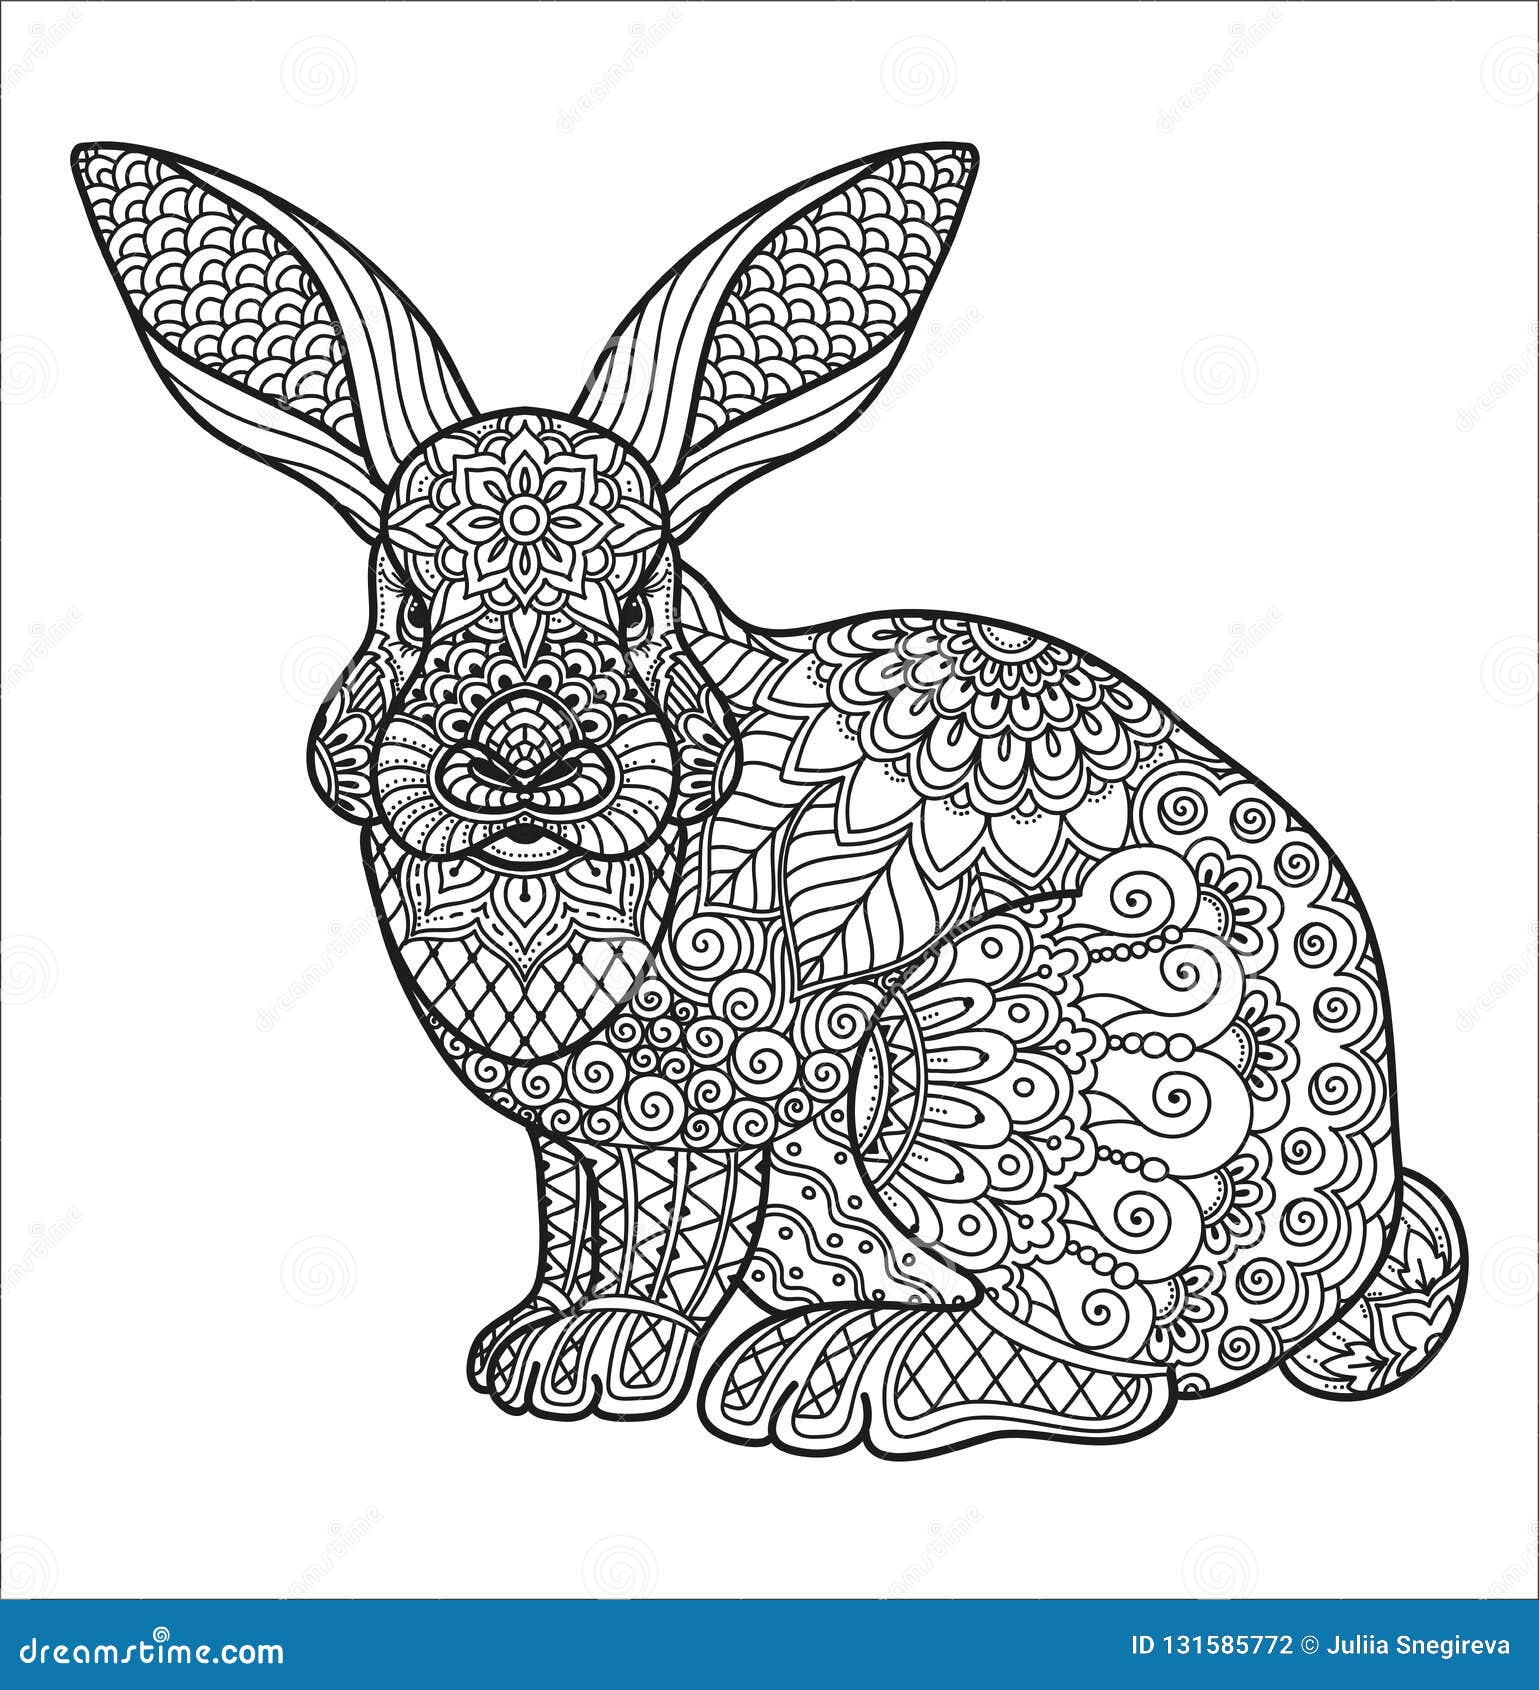 Coloring rabbit stock illustrations â coloring rabbit stock illustrations vectors clipart